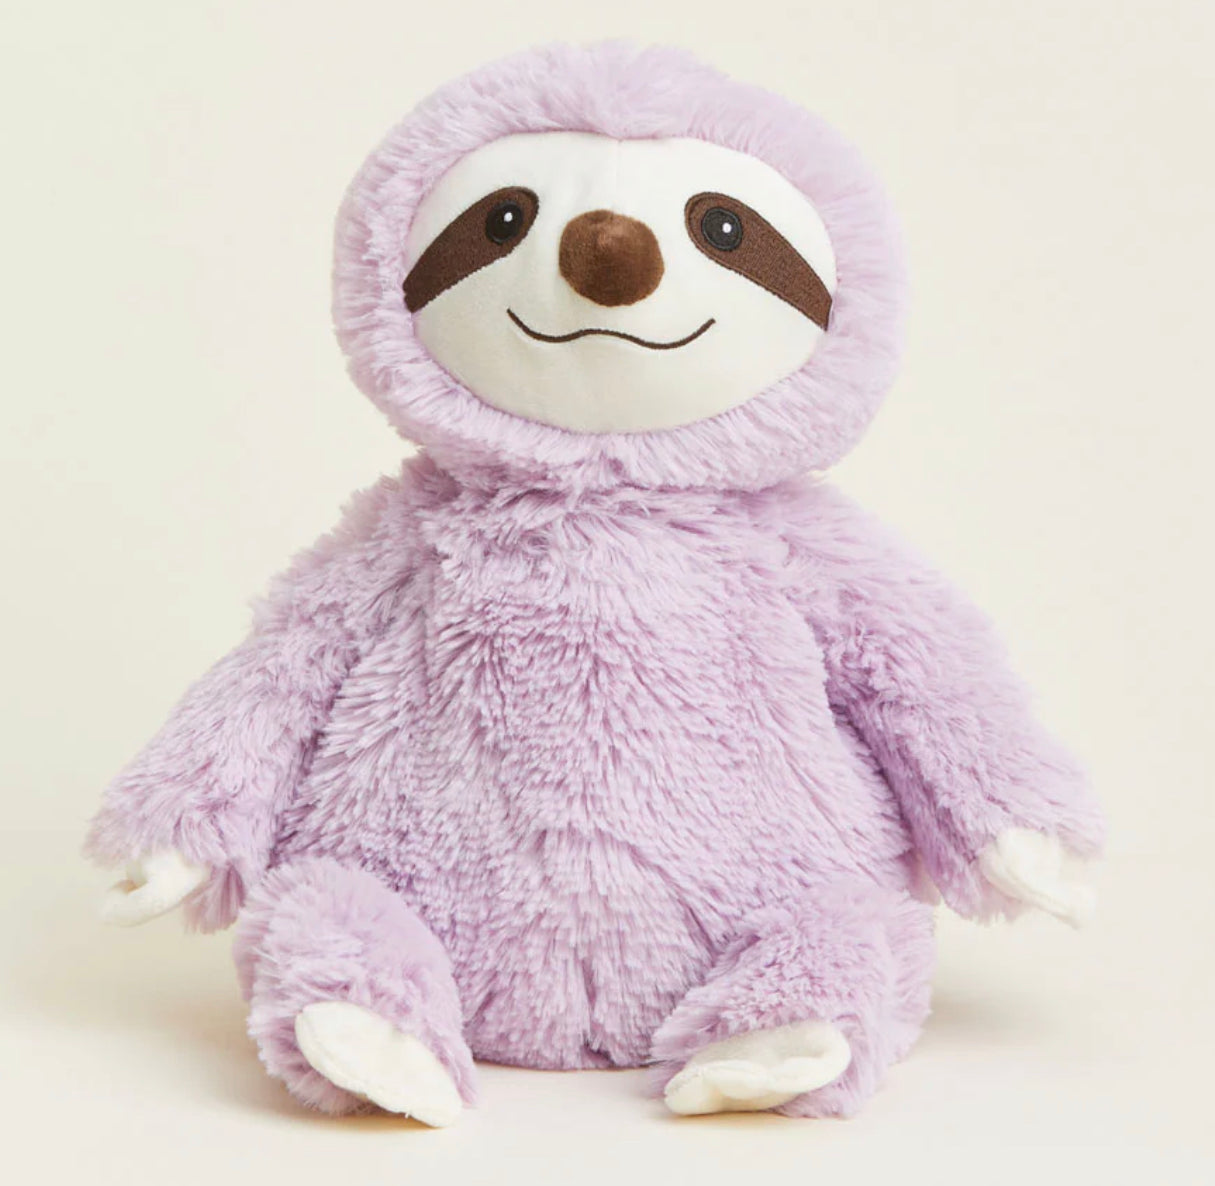 Warmies purple sloth